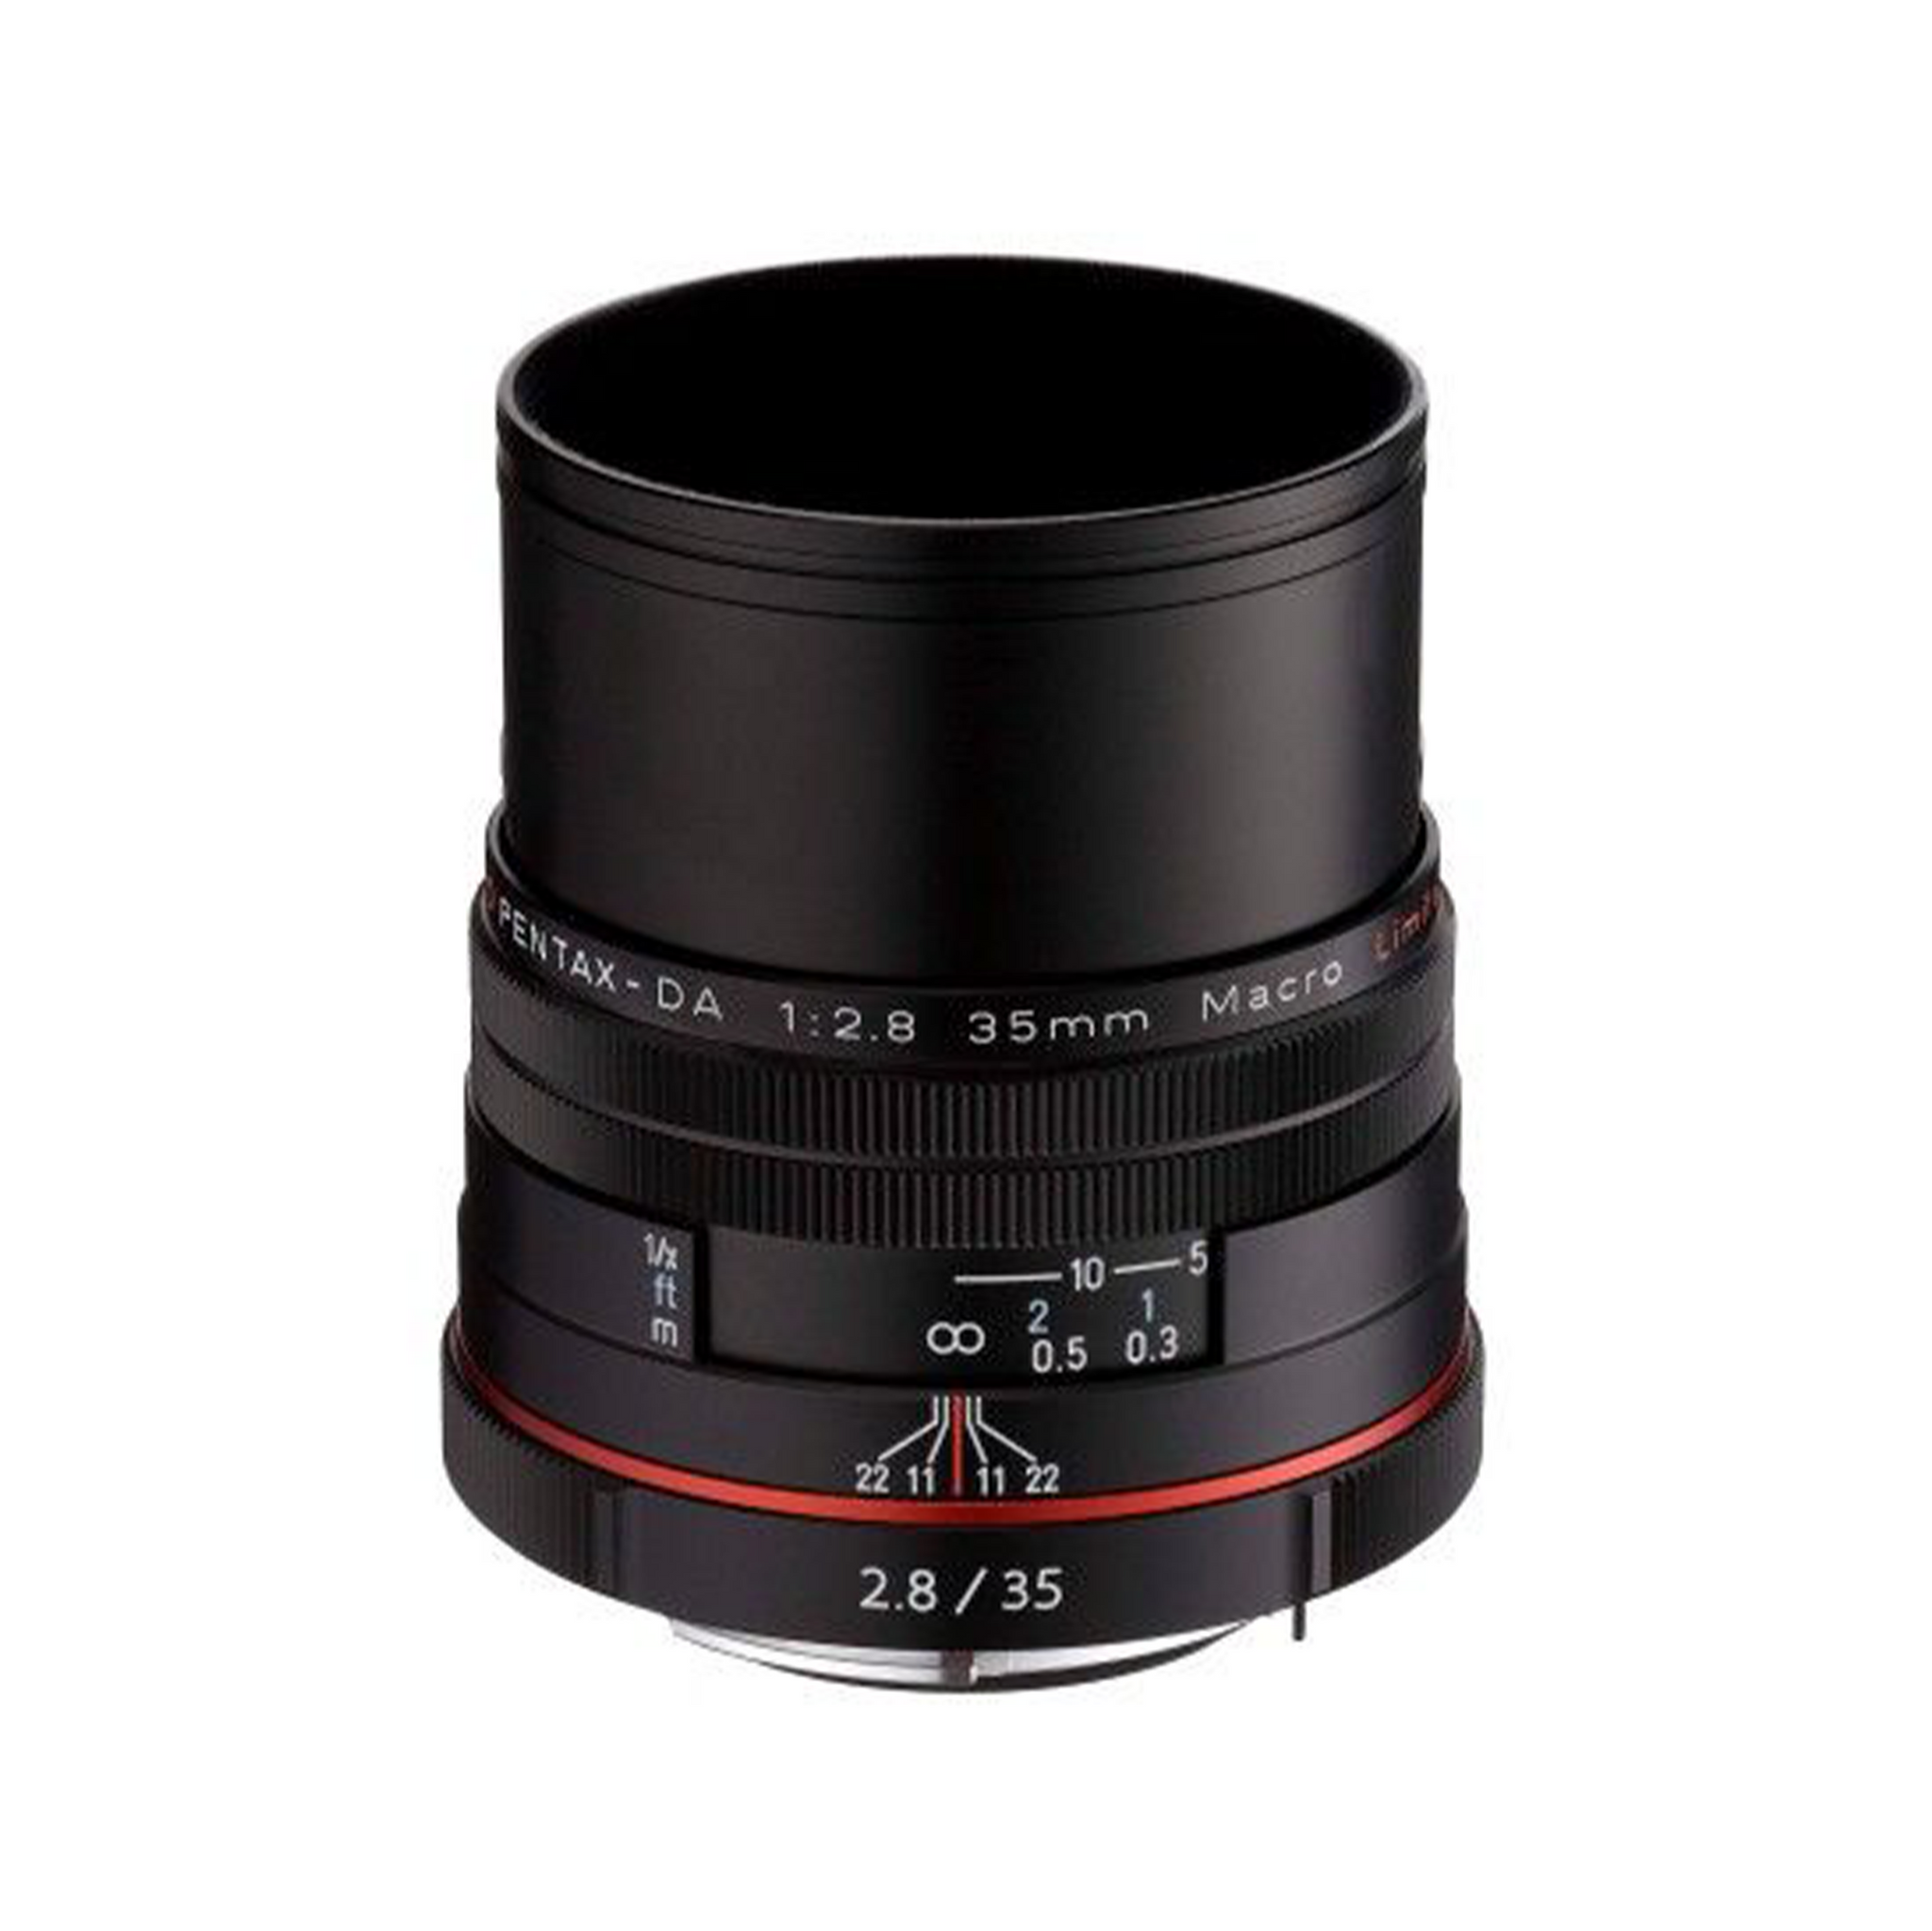 HD PENTAX-DA 35mm F2.8 Macro Limited Lens-Camera Lenses-futuromic